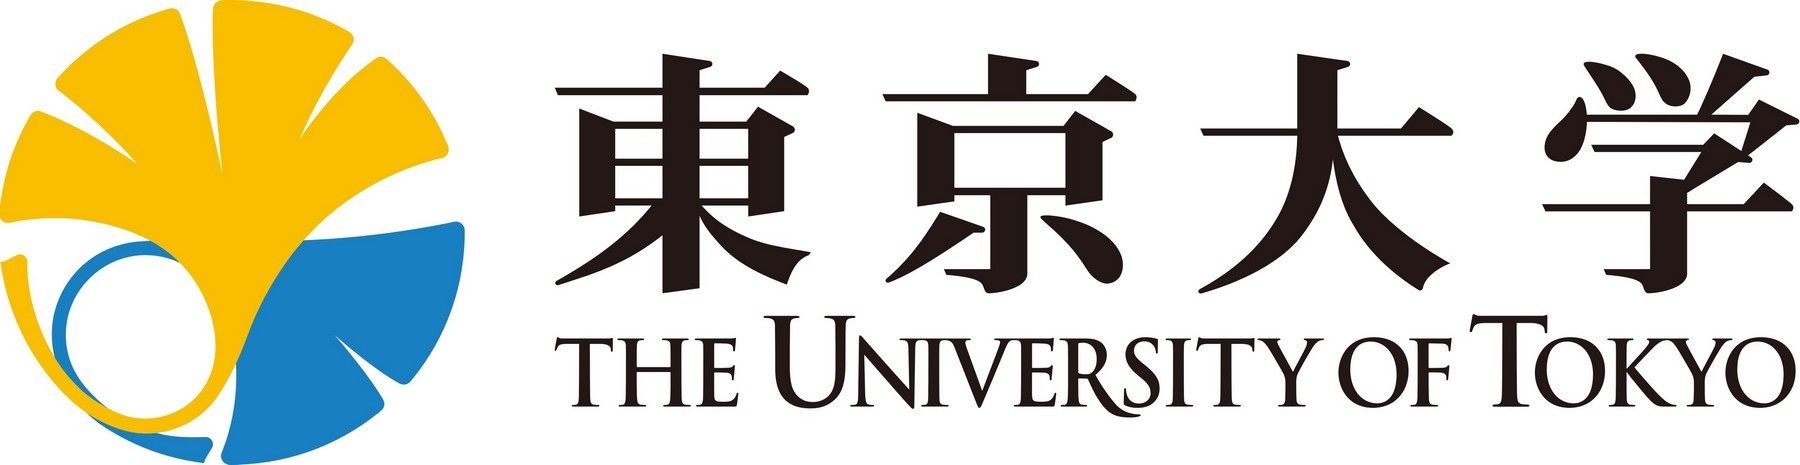 university of tokyo logo1